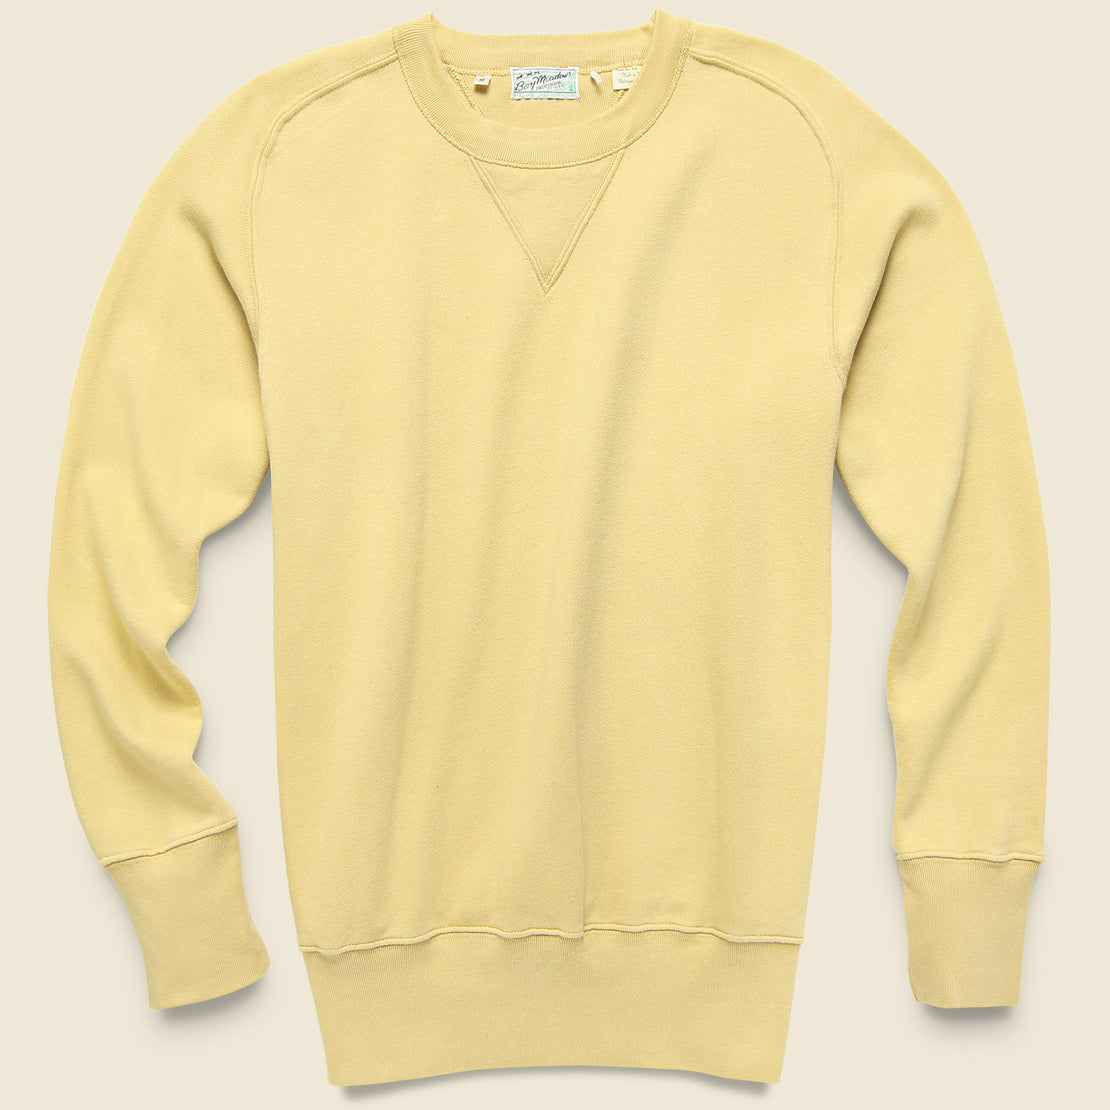 Levis Vintage Clothing Bay Meadows Sweatshirt - Custard